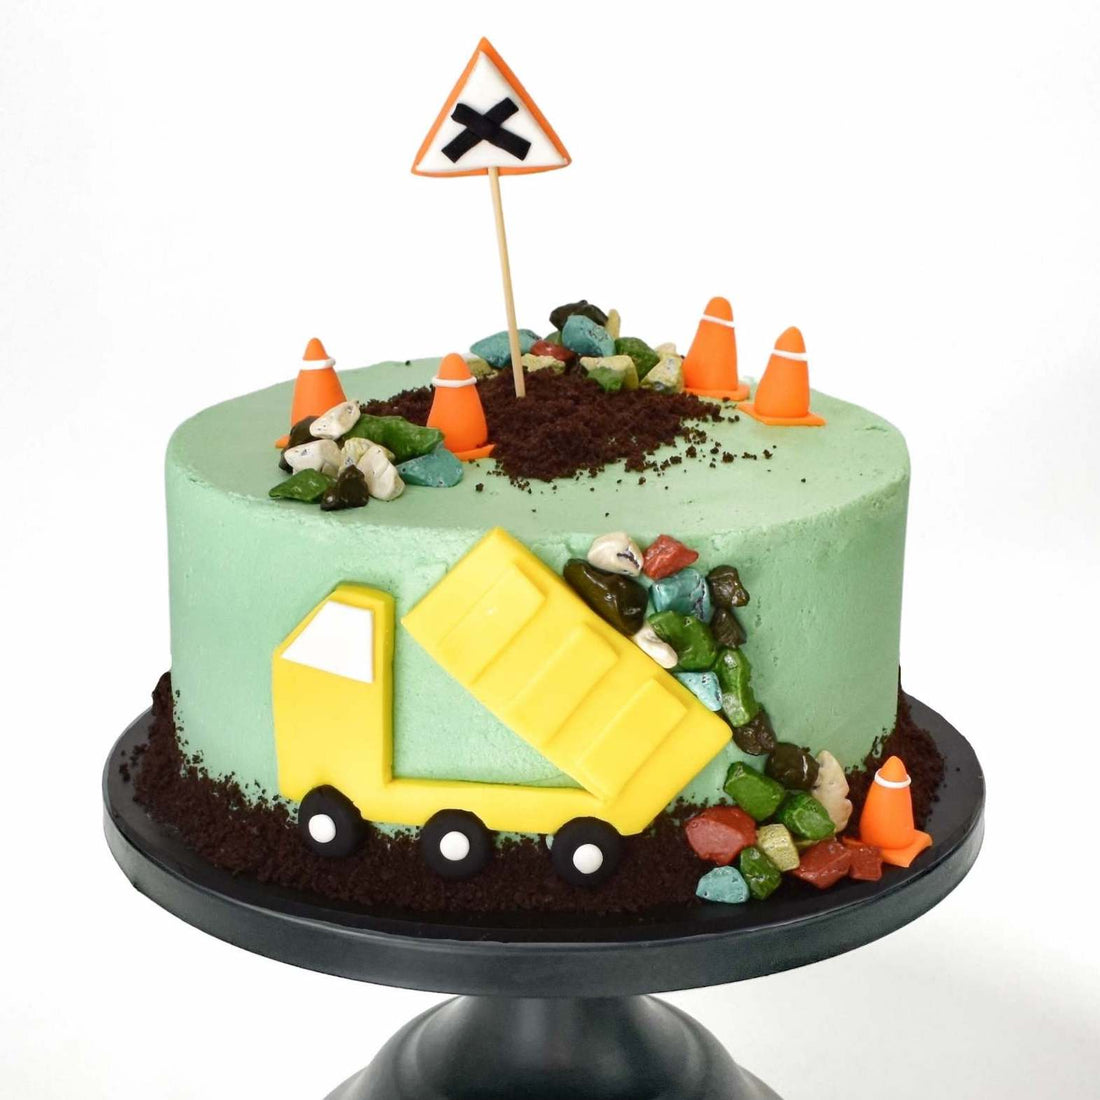 Construction Parties, Construction theme ideas, Construction Cake, DIY Cake Kit